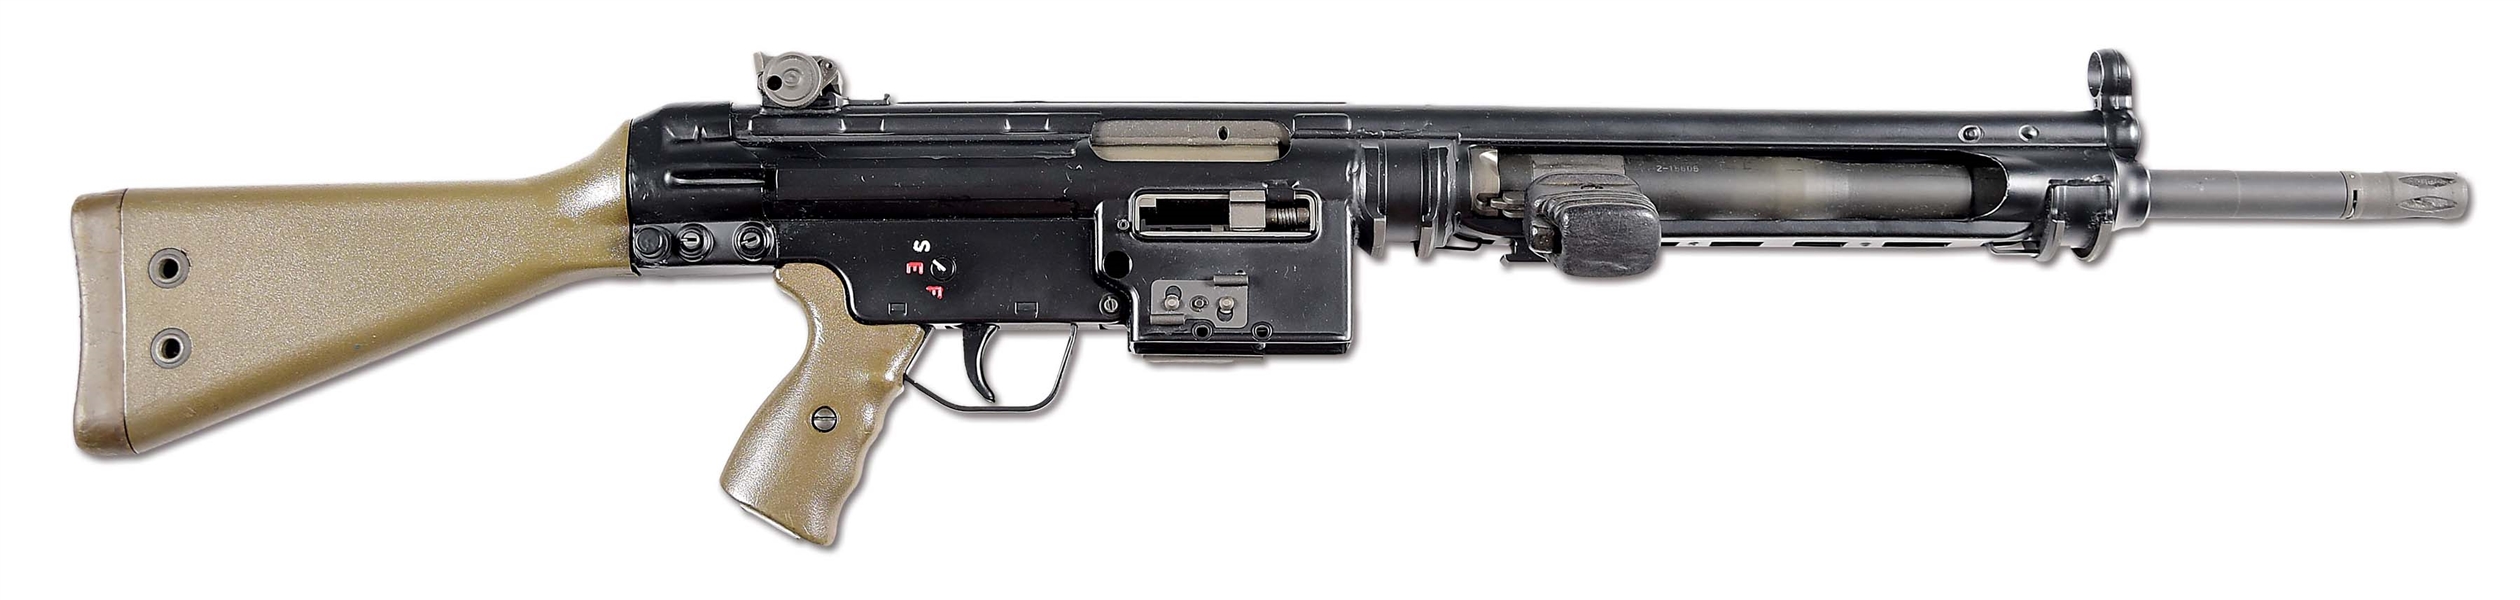 (N) FANTASTIC TERRY DYER MANUFACTURED HECKLER AND KOCH HK-21 BELT FED MACHINE GUN (FULLY TRANSFERABLE).